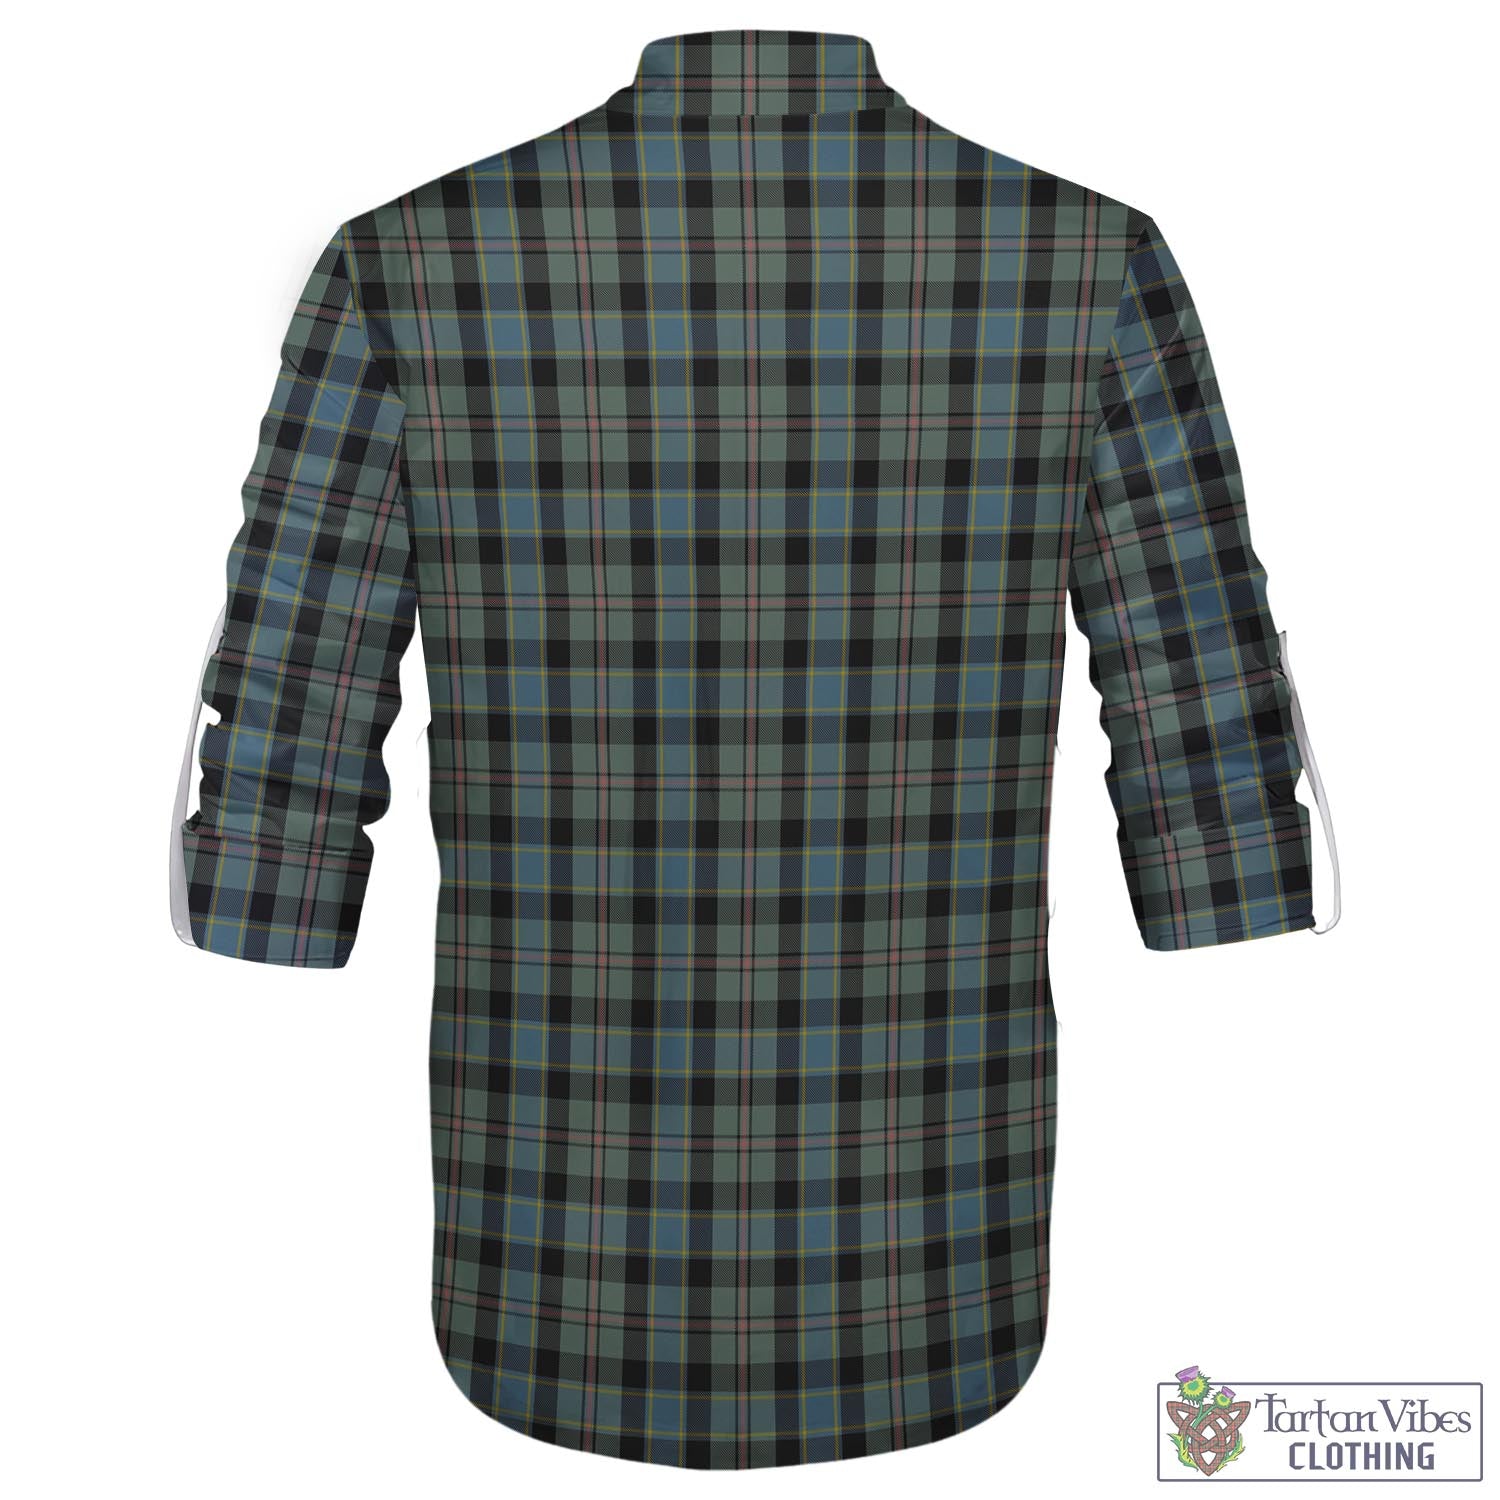 Tartan Vibes Clothing Ogilvie (Ogilvy) Hunting Tartan Men's Scottish Traditional Jacobite Ghillie Kilt Shirt with Family Crest